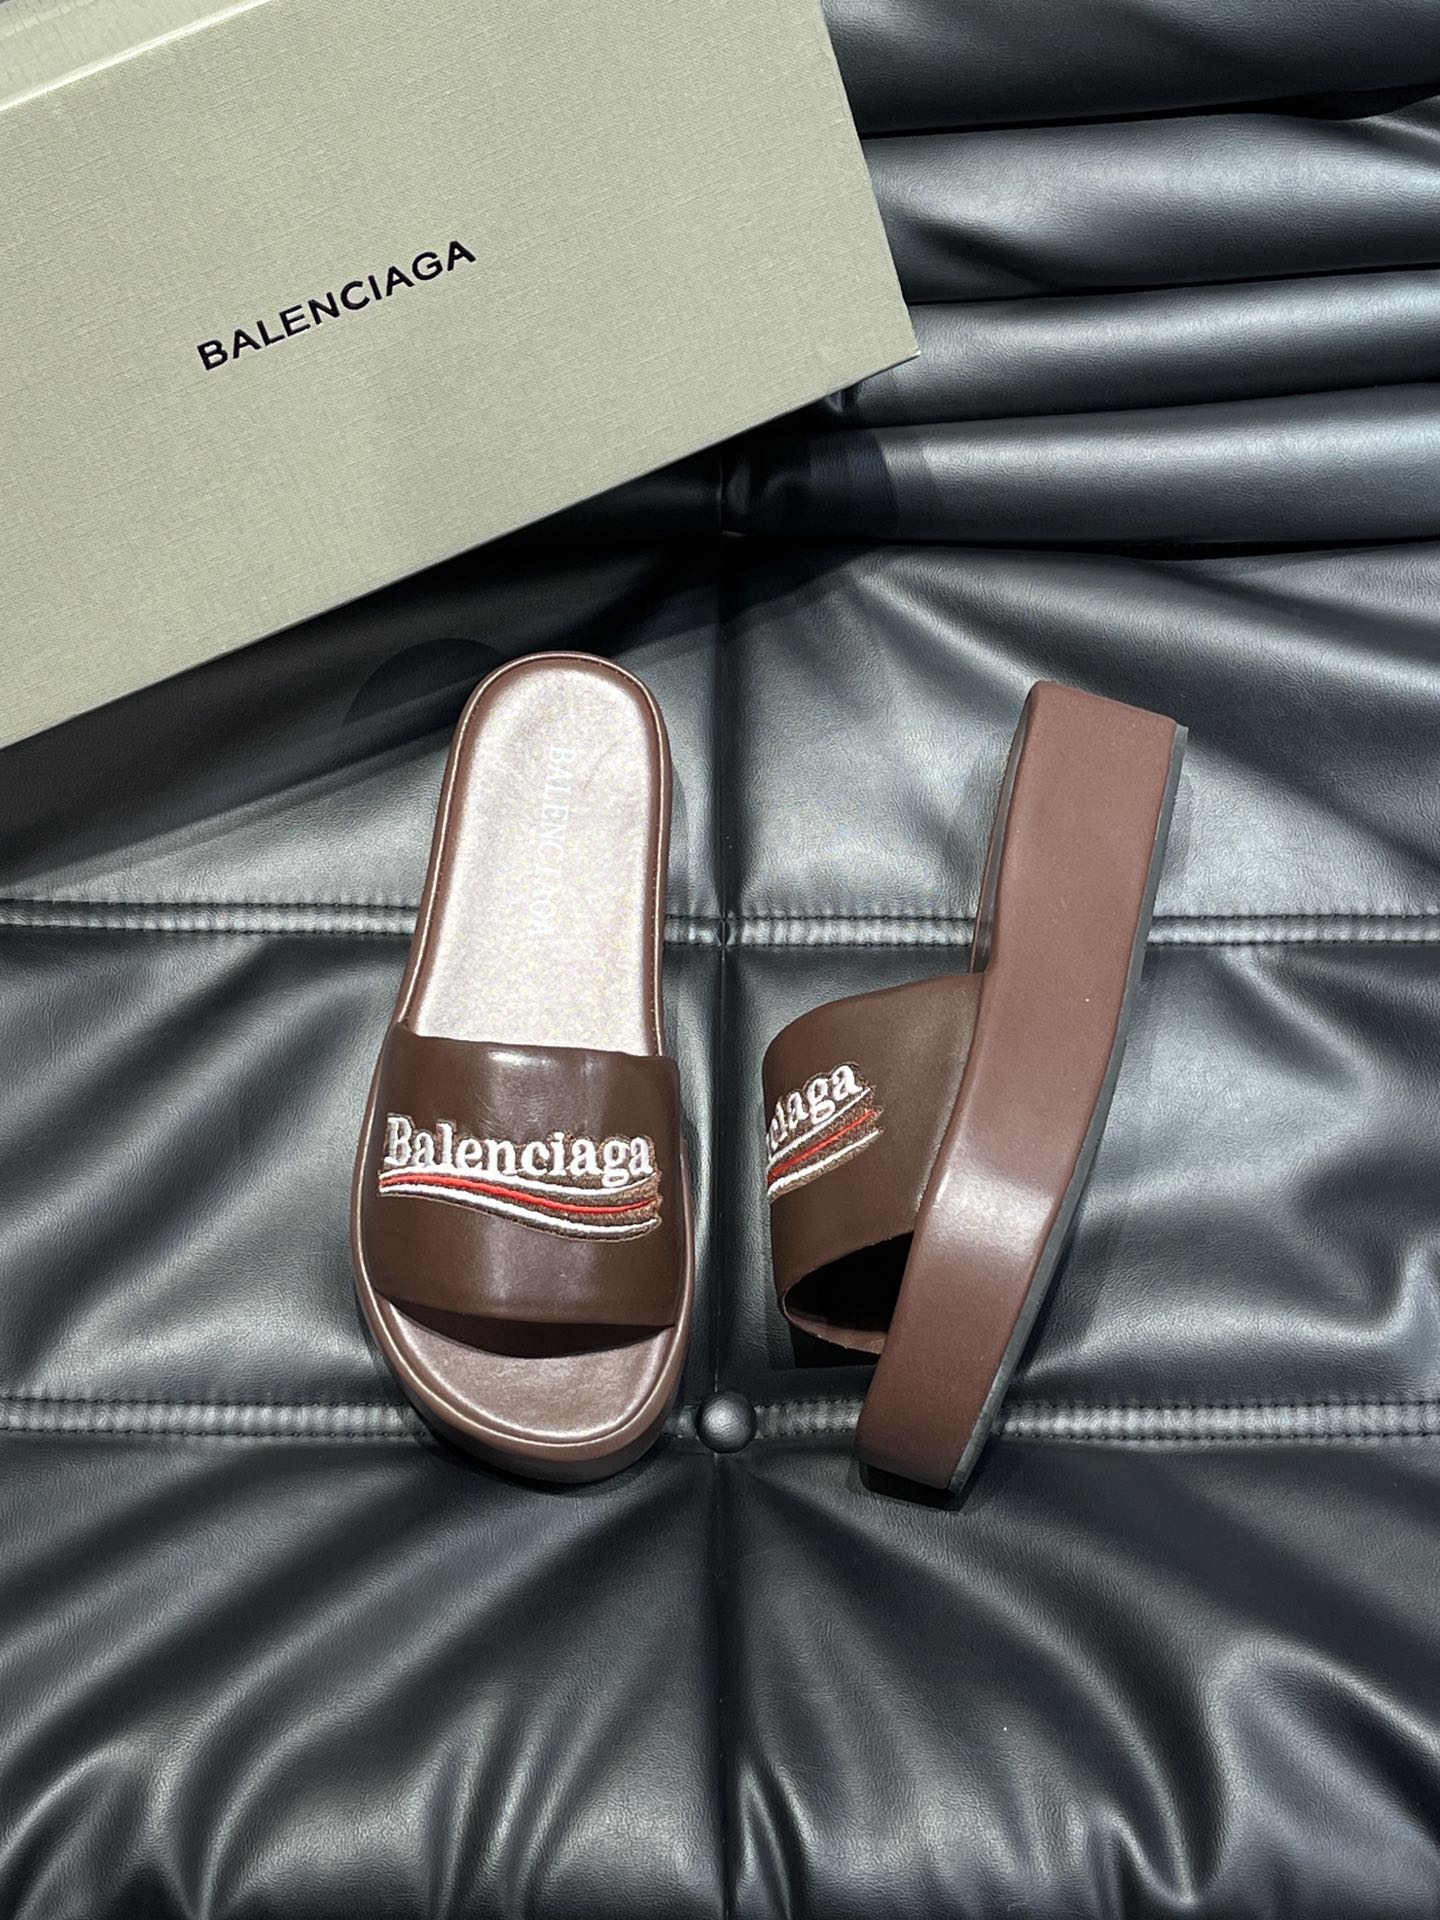 Balenciaga巴黎世家新款情侣厚底拖鞋可乐刺绣拖鞋一如既往的时尚顶级版本鞋面牛皮搭配乐乐刺绣特别的